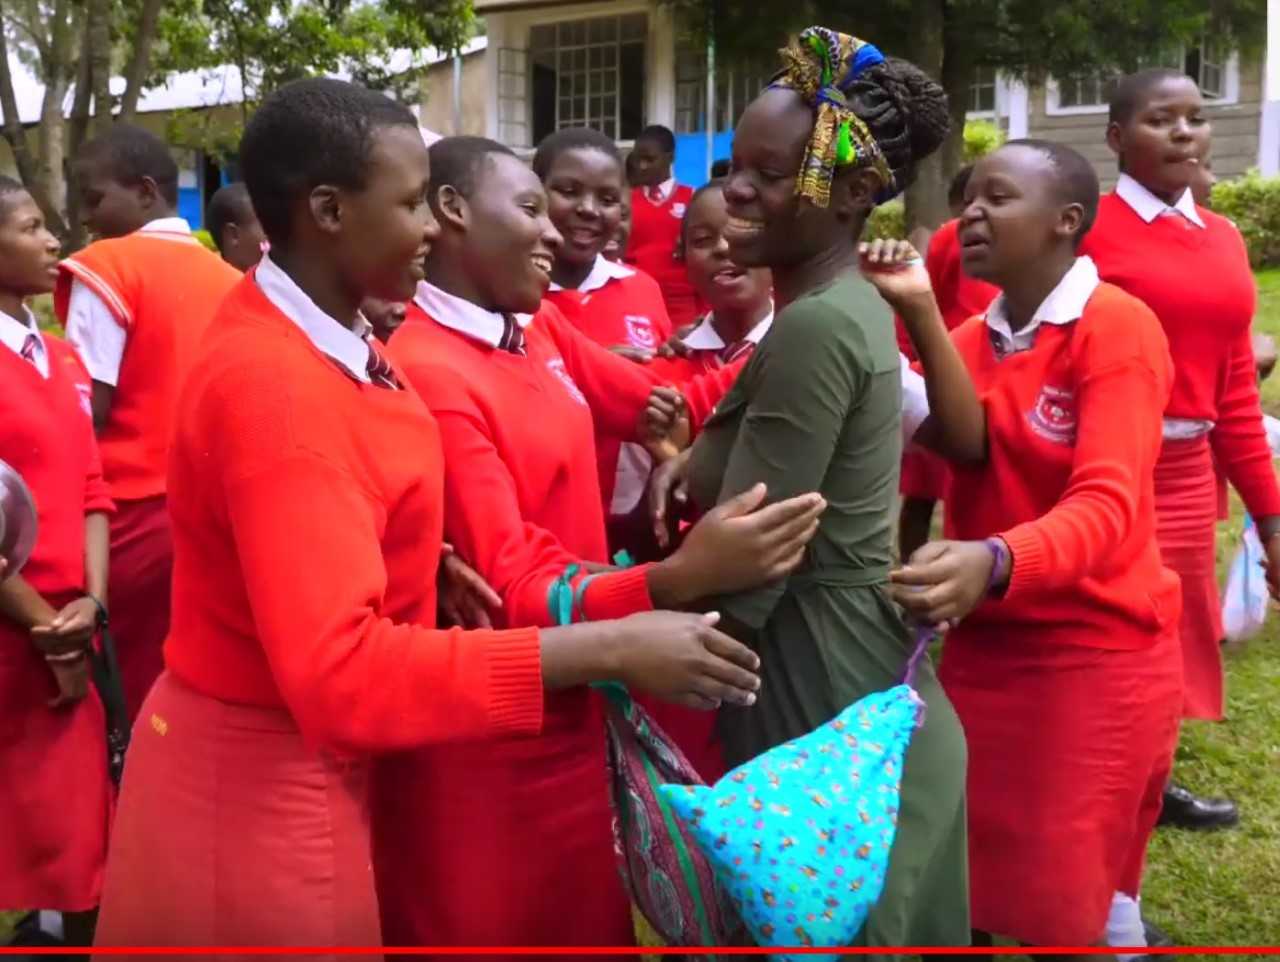 Sending Days for Girls Kits to Kenya